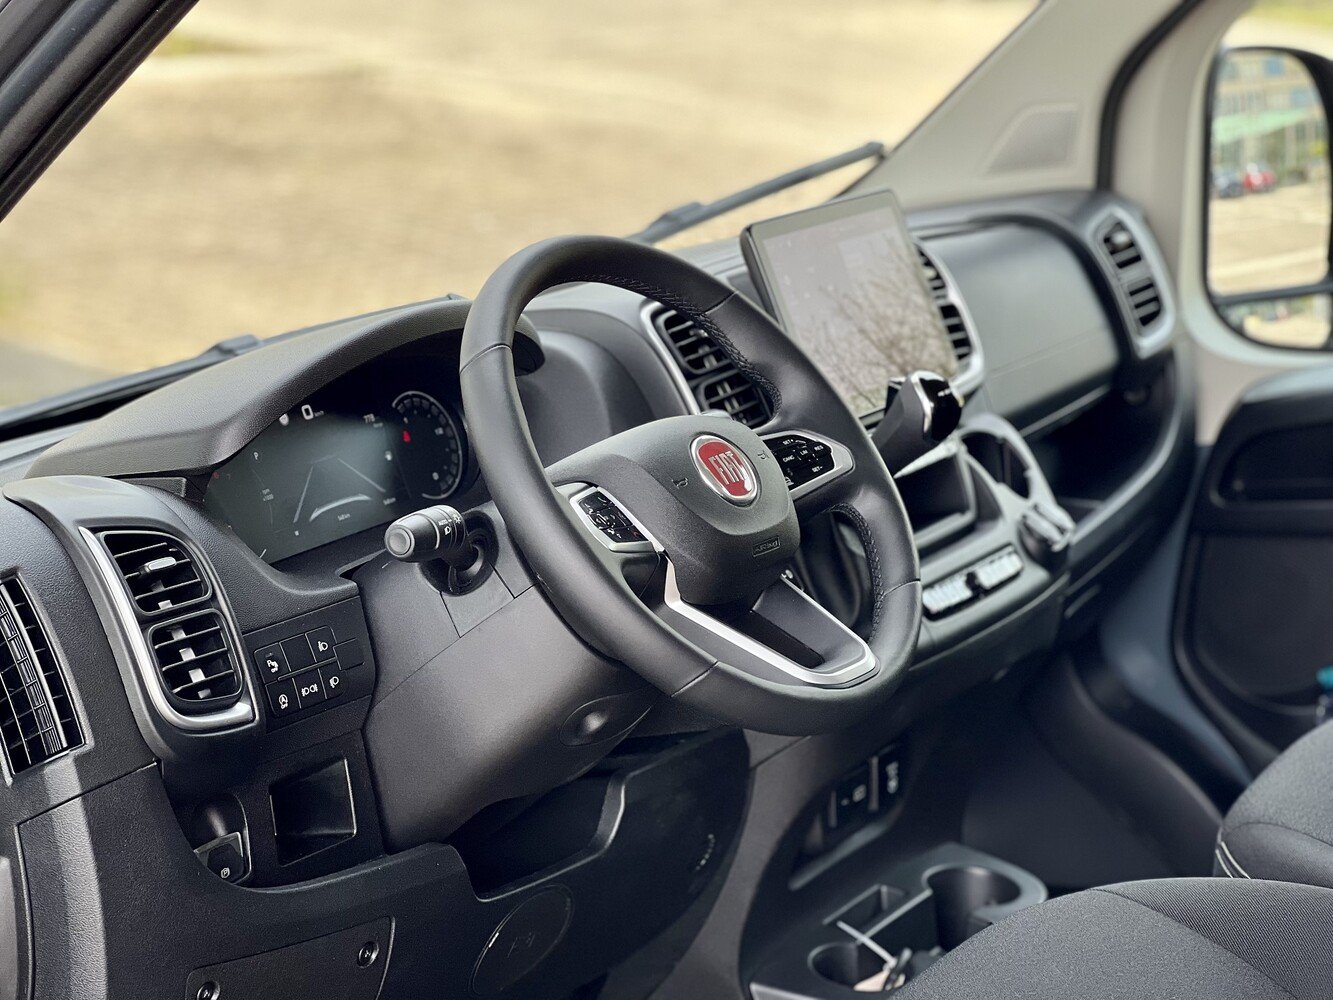 Fiat Ducato Modellpflege 2021 – Cockpit neu